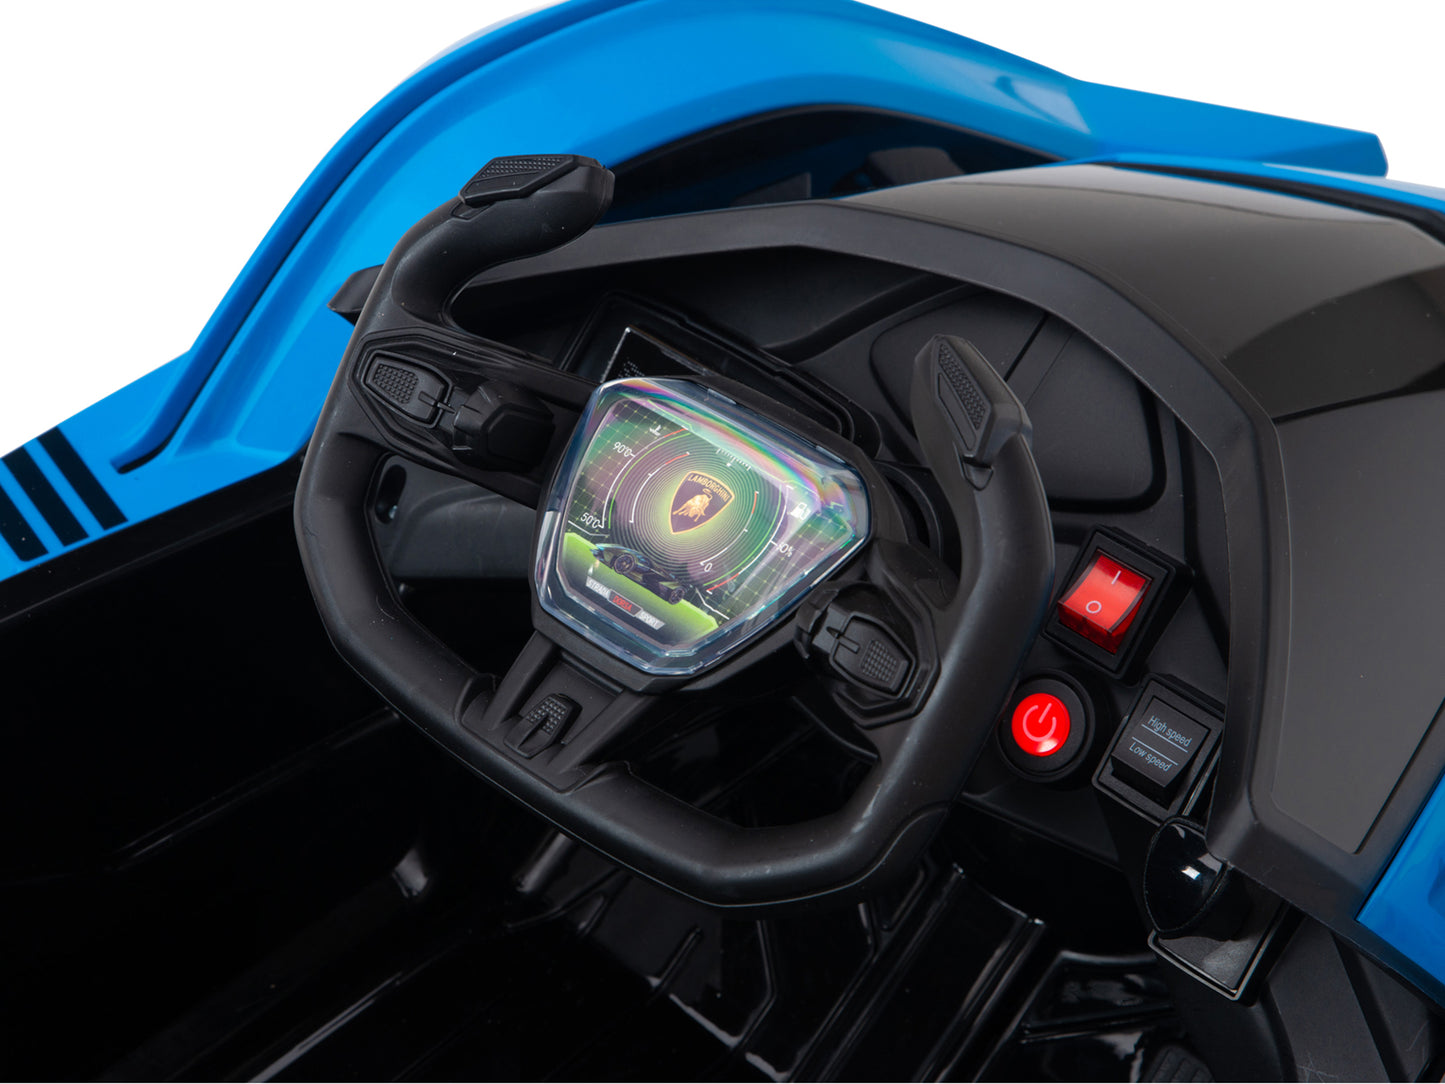 Lamborghini V12 Vision GT Kids Ride On Car with Remote Control - Blue